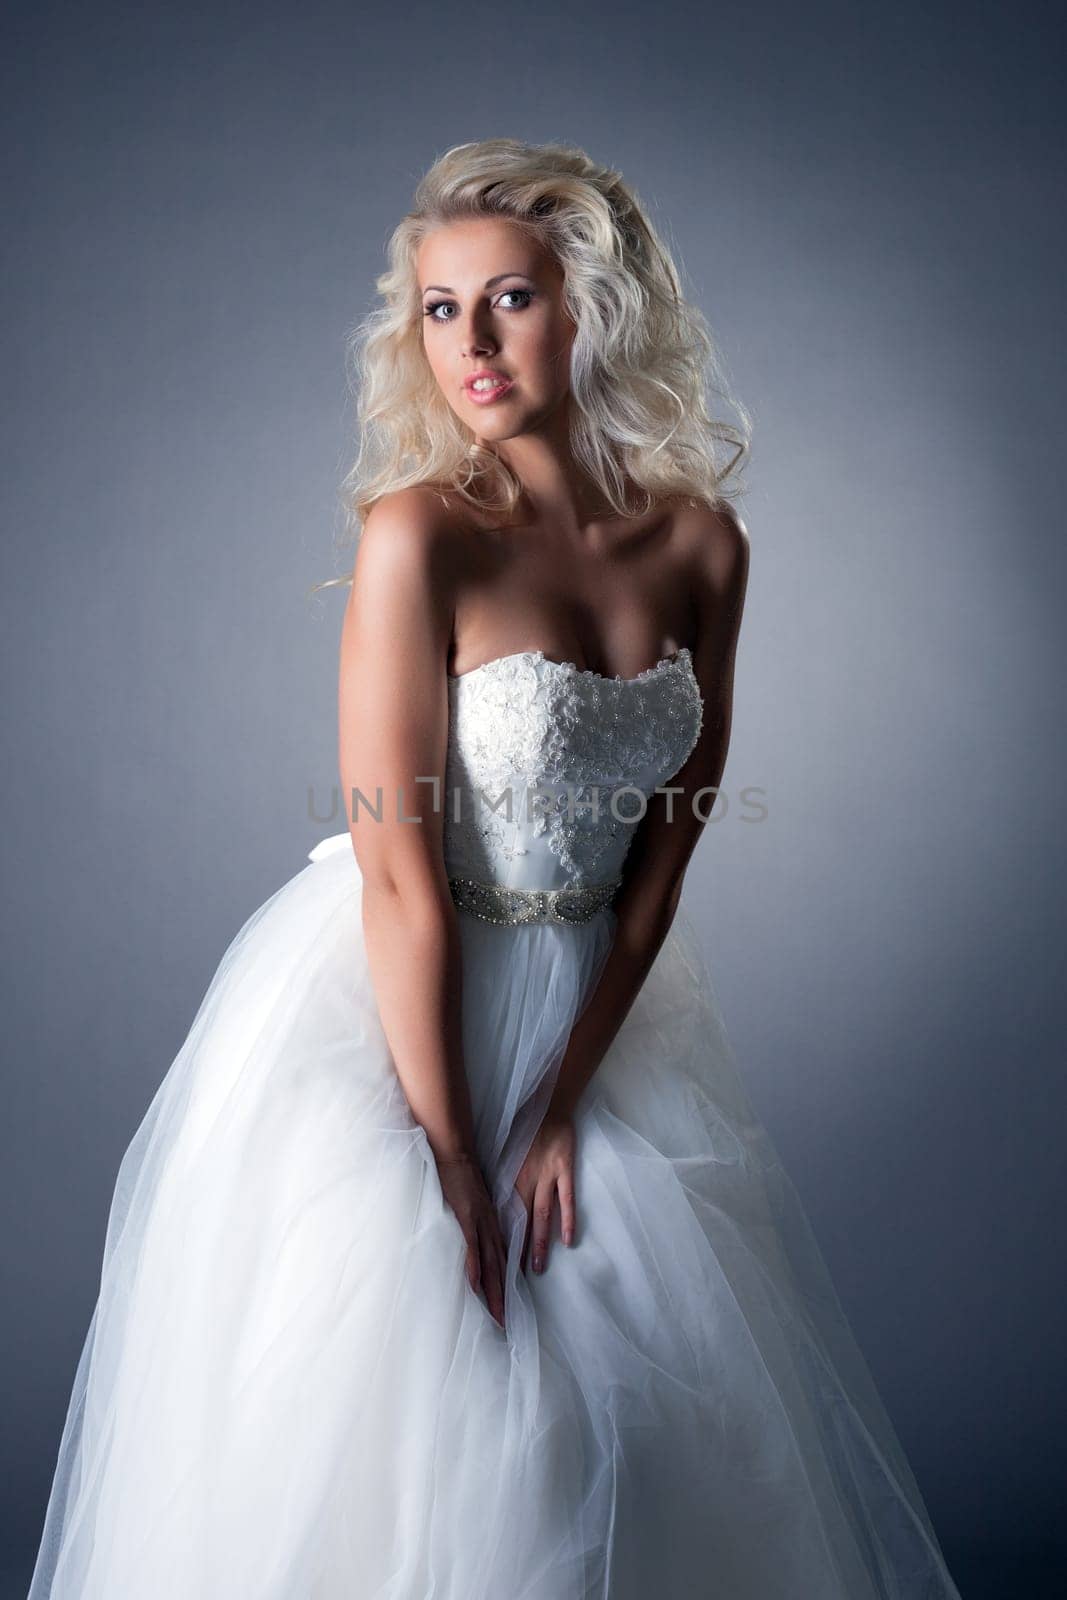 Romantic blonde posing in lush wedding dress, on gray background